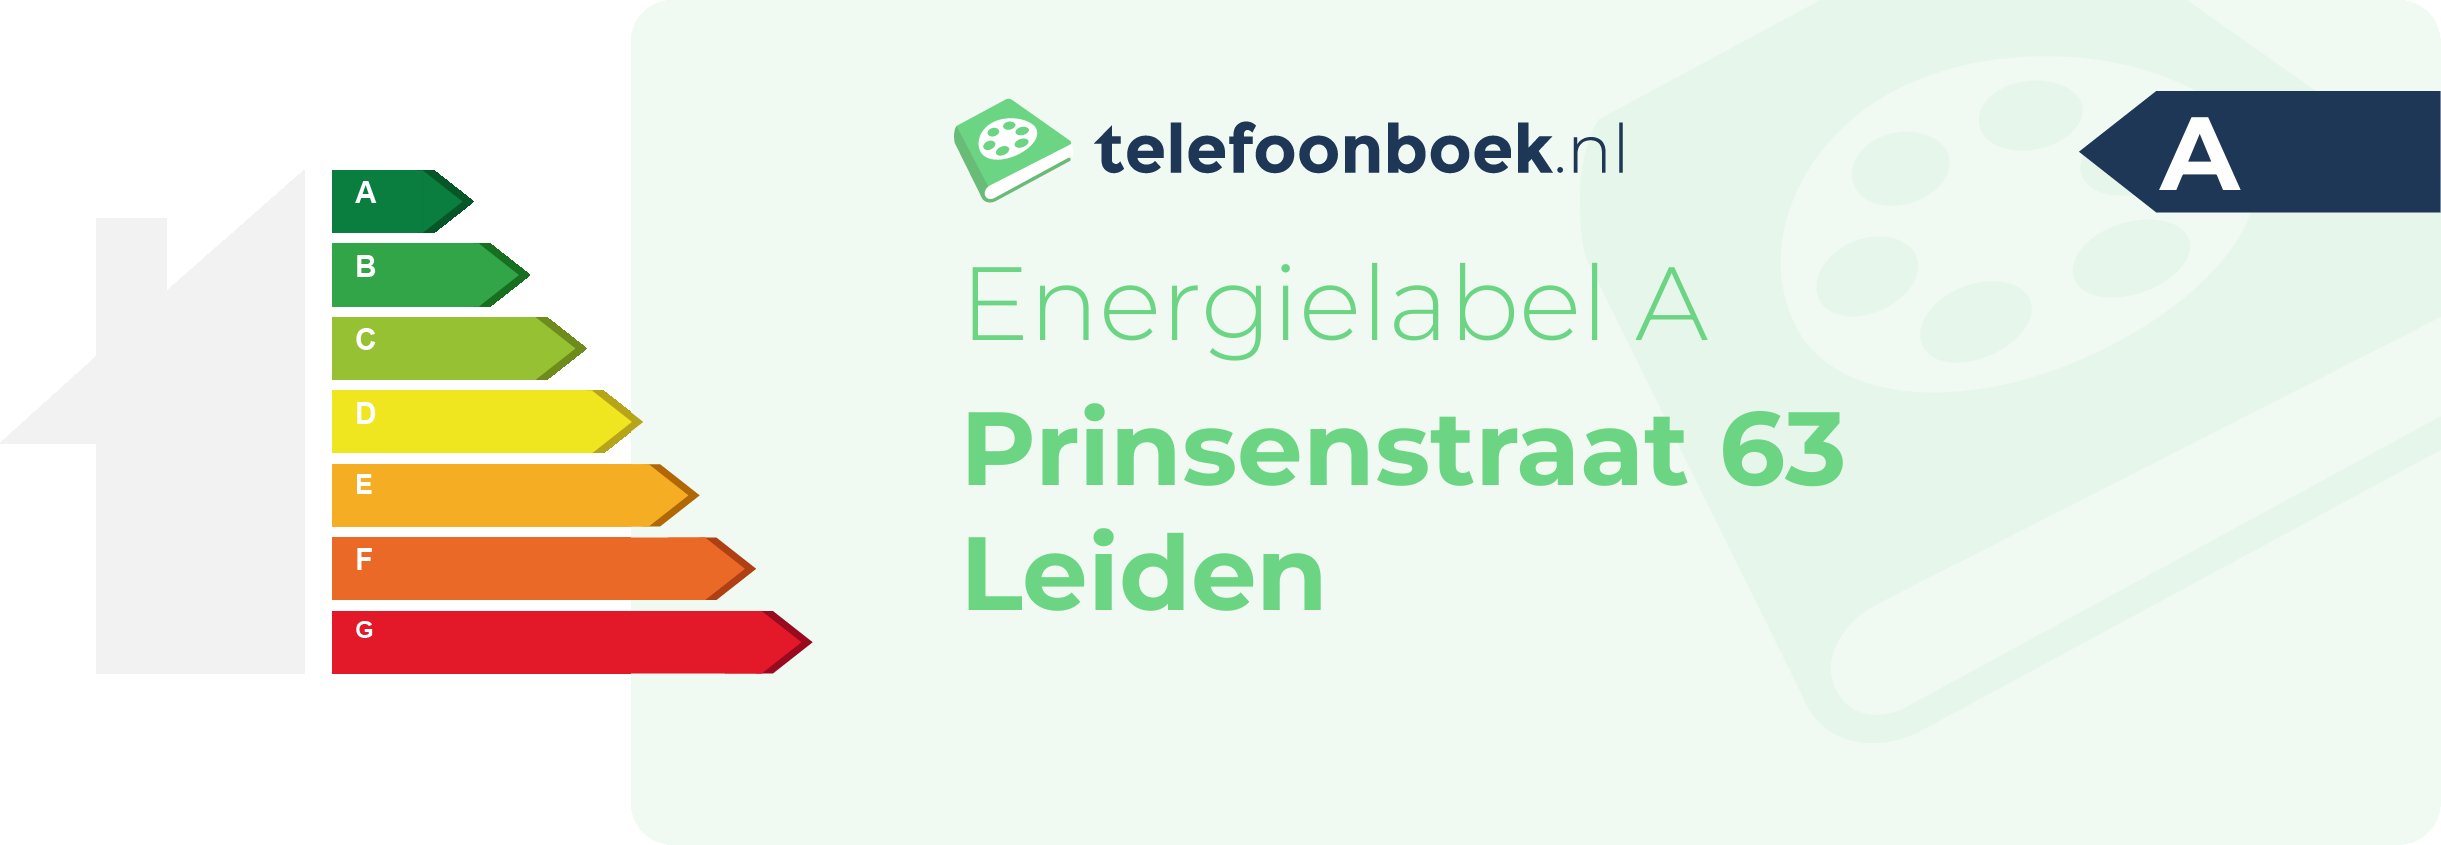 Energielabel Prinsenstraat 63 Leiden